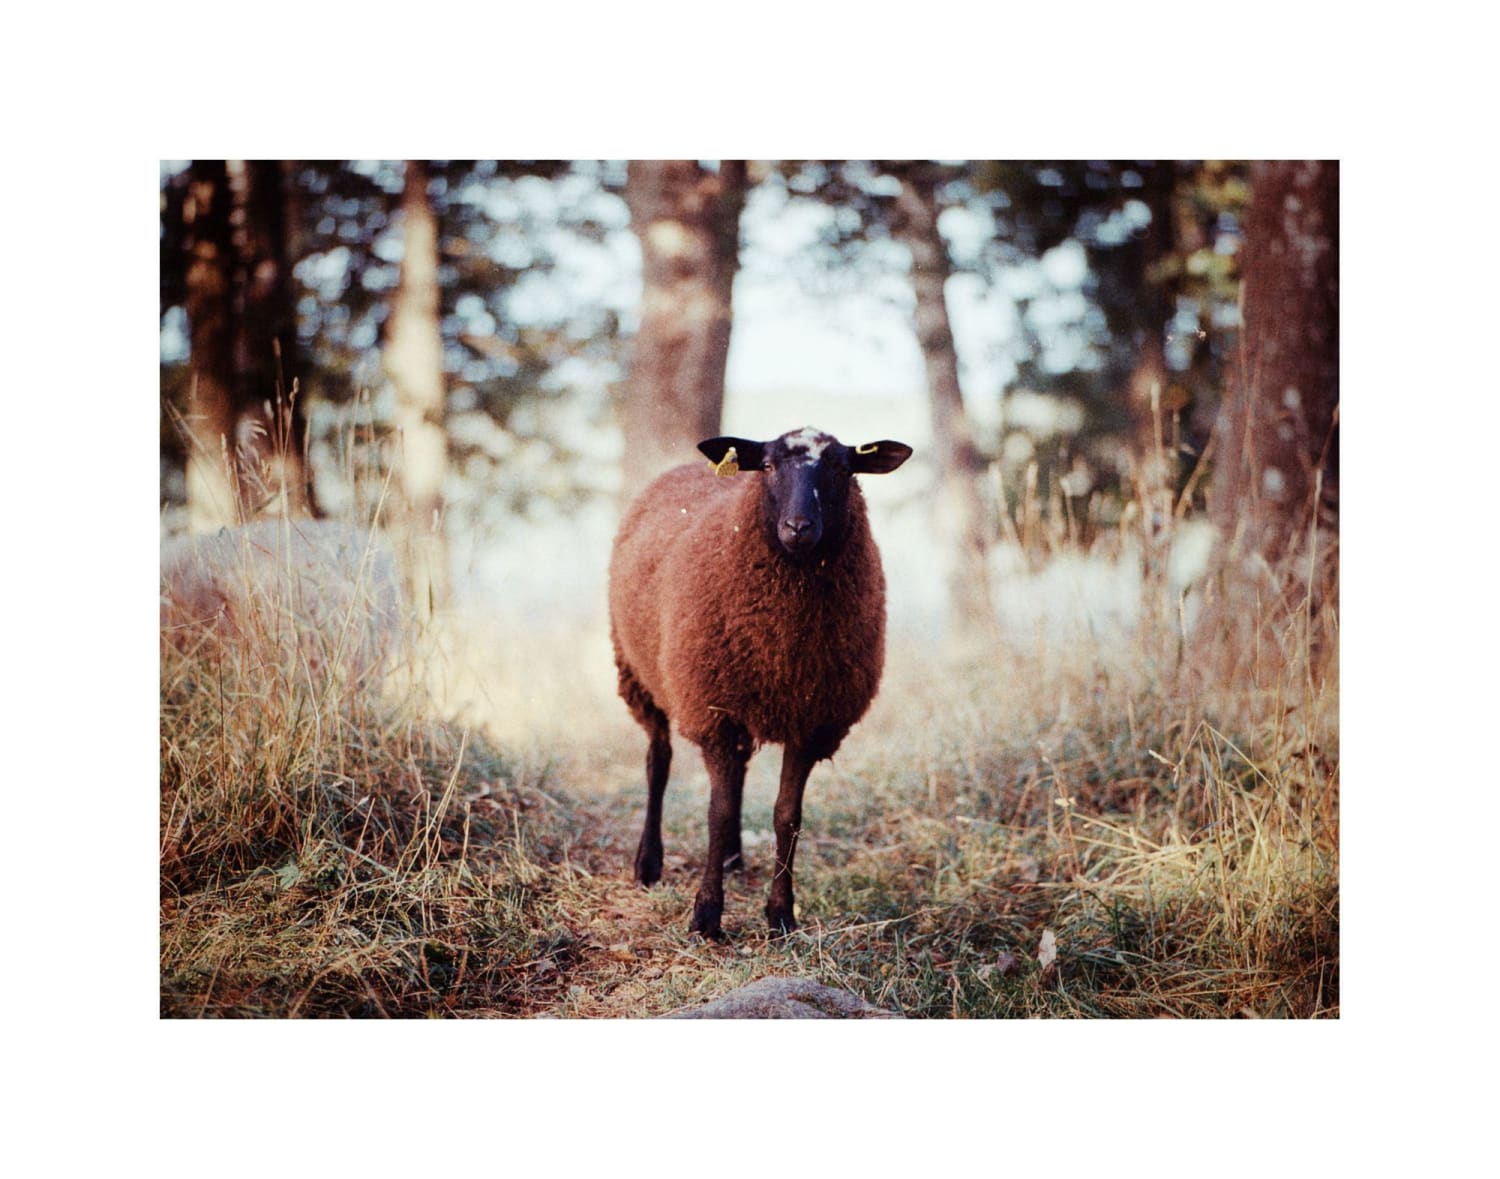 Sheep Thrills [Mamiya 645 Pro | Mamiya Sekor 150mm f/3.5 | Portra 400]